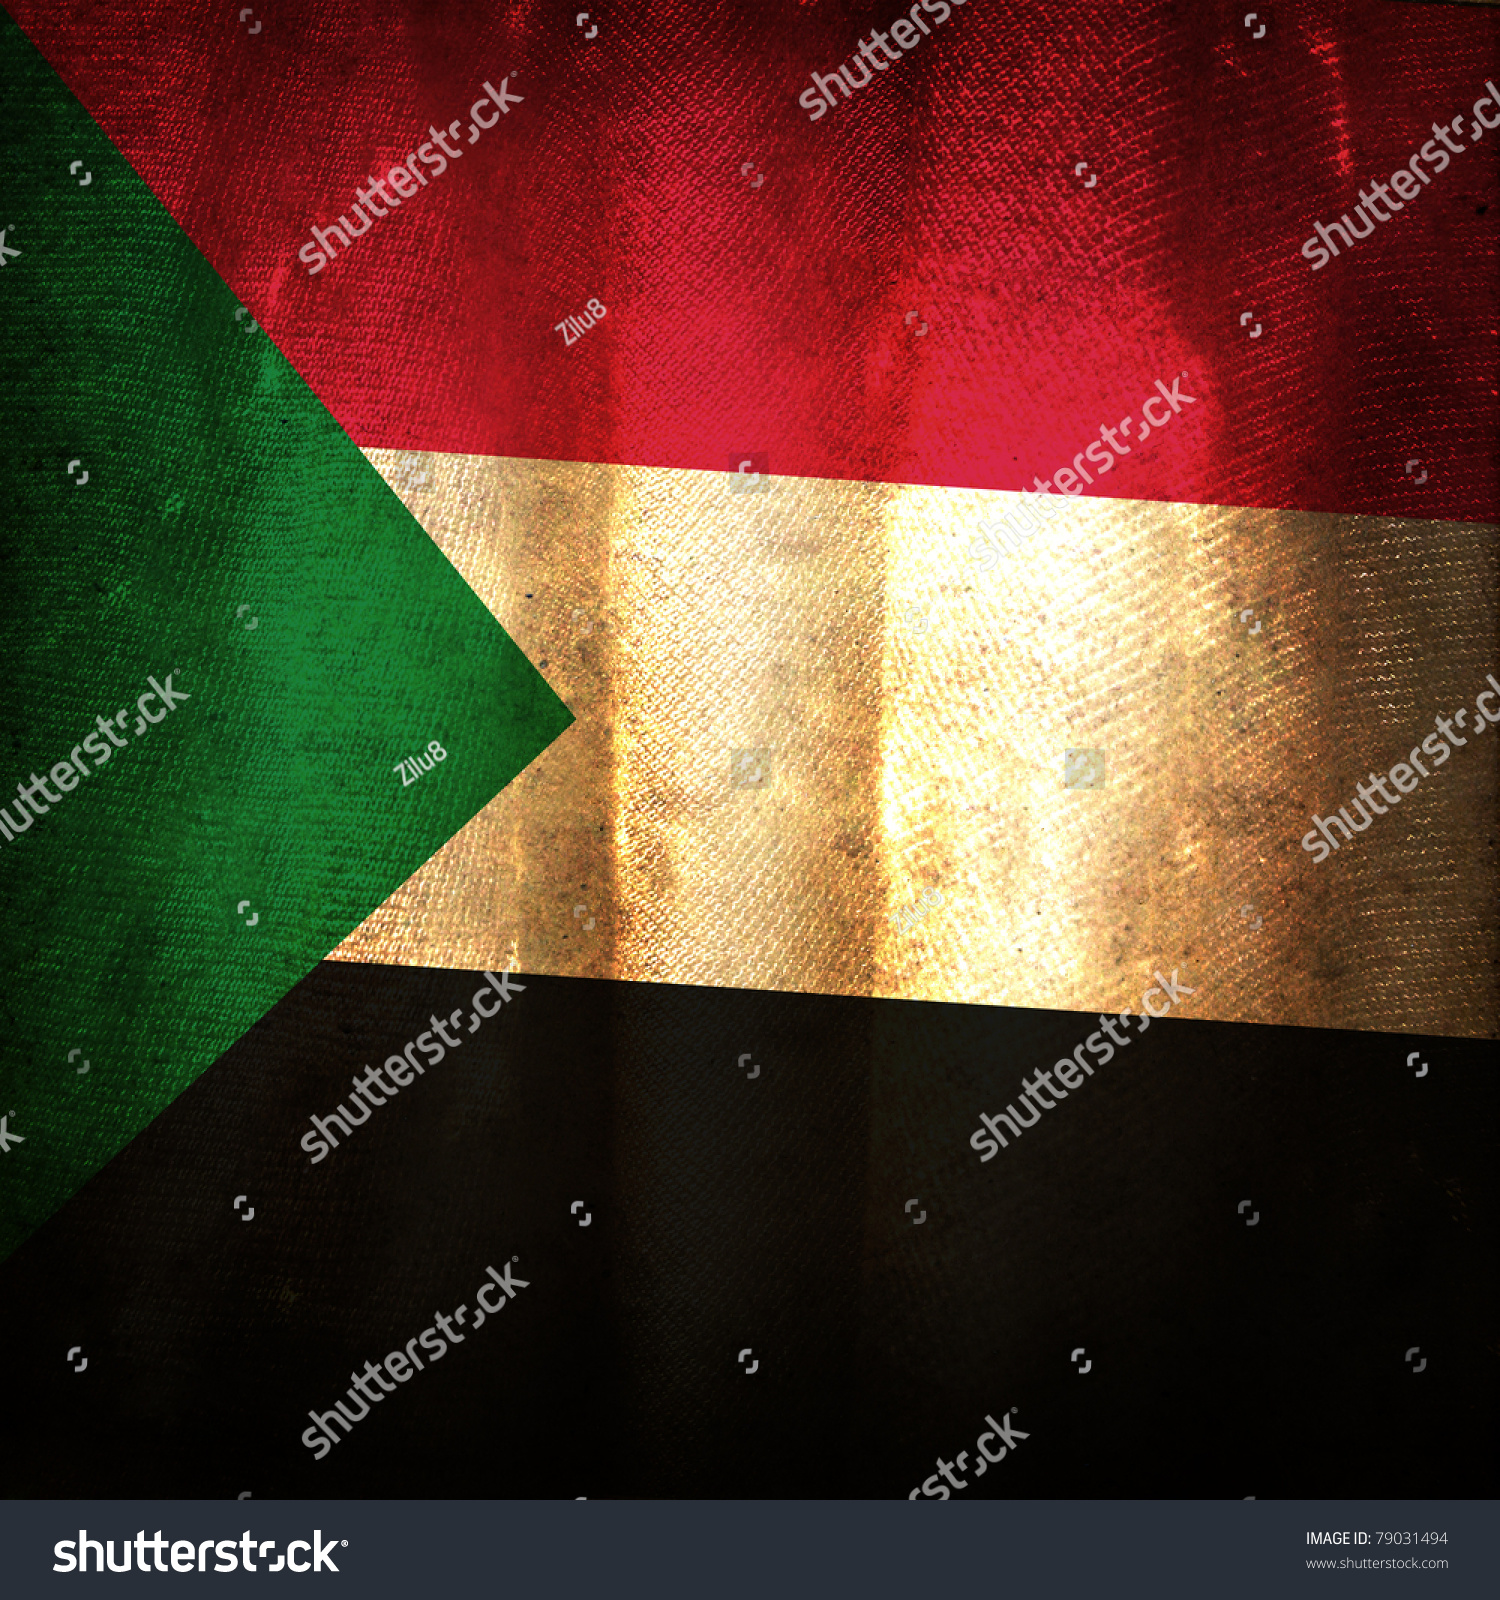 Old Grunge Flag Sudan Stock Photo (Royalty Free) 79031494 - Shutterstock